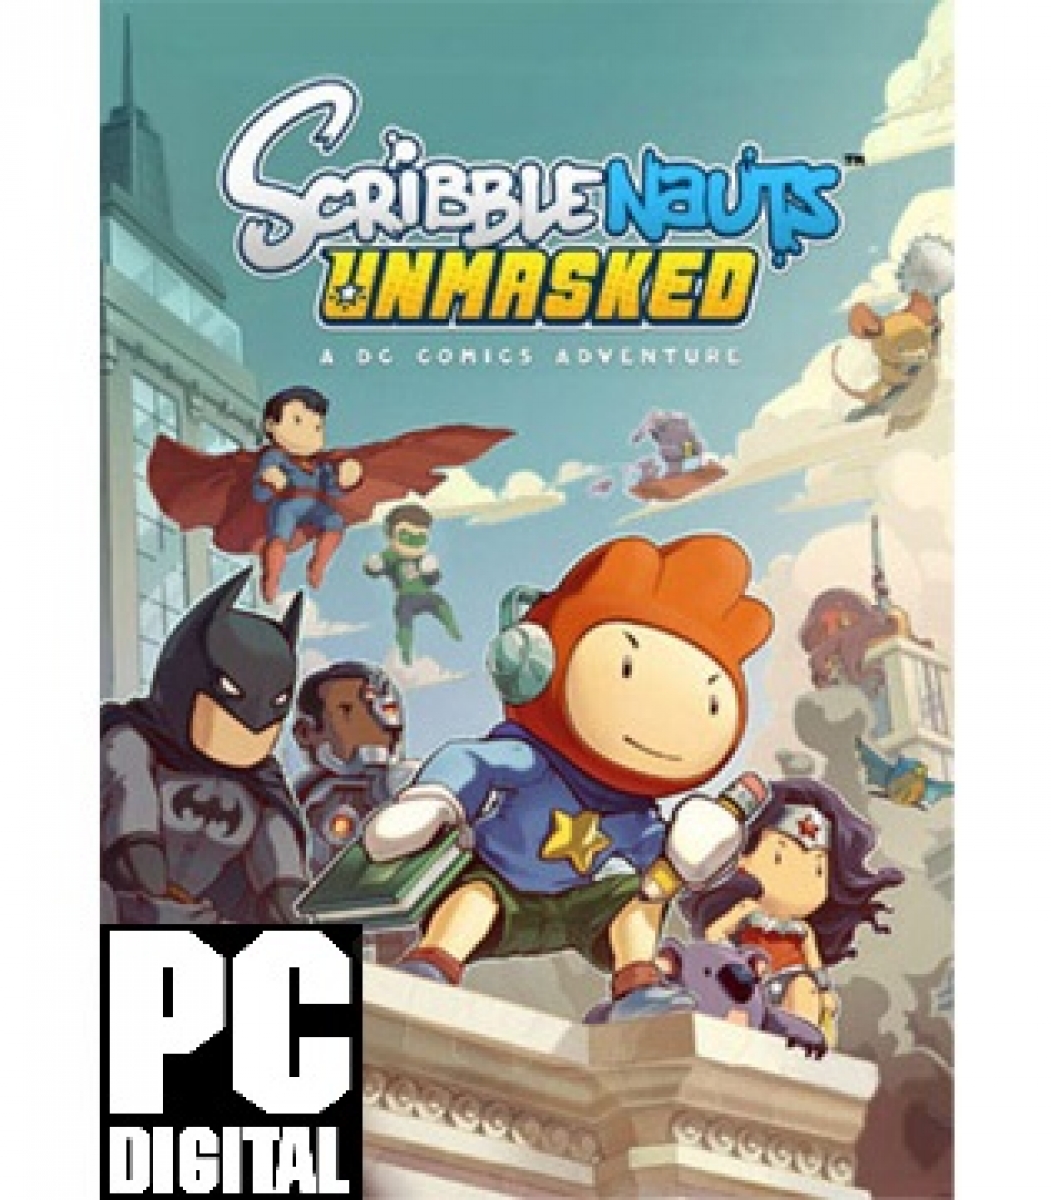 Scribblenauts Unmasked : A DC Comics Adventure PC (Digital)